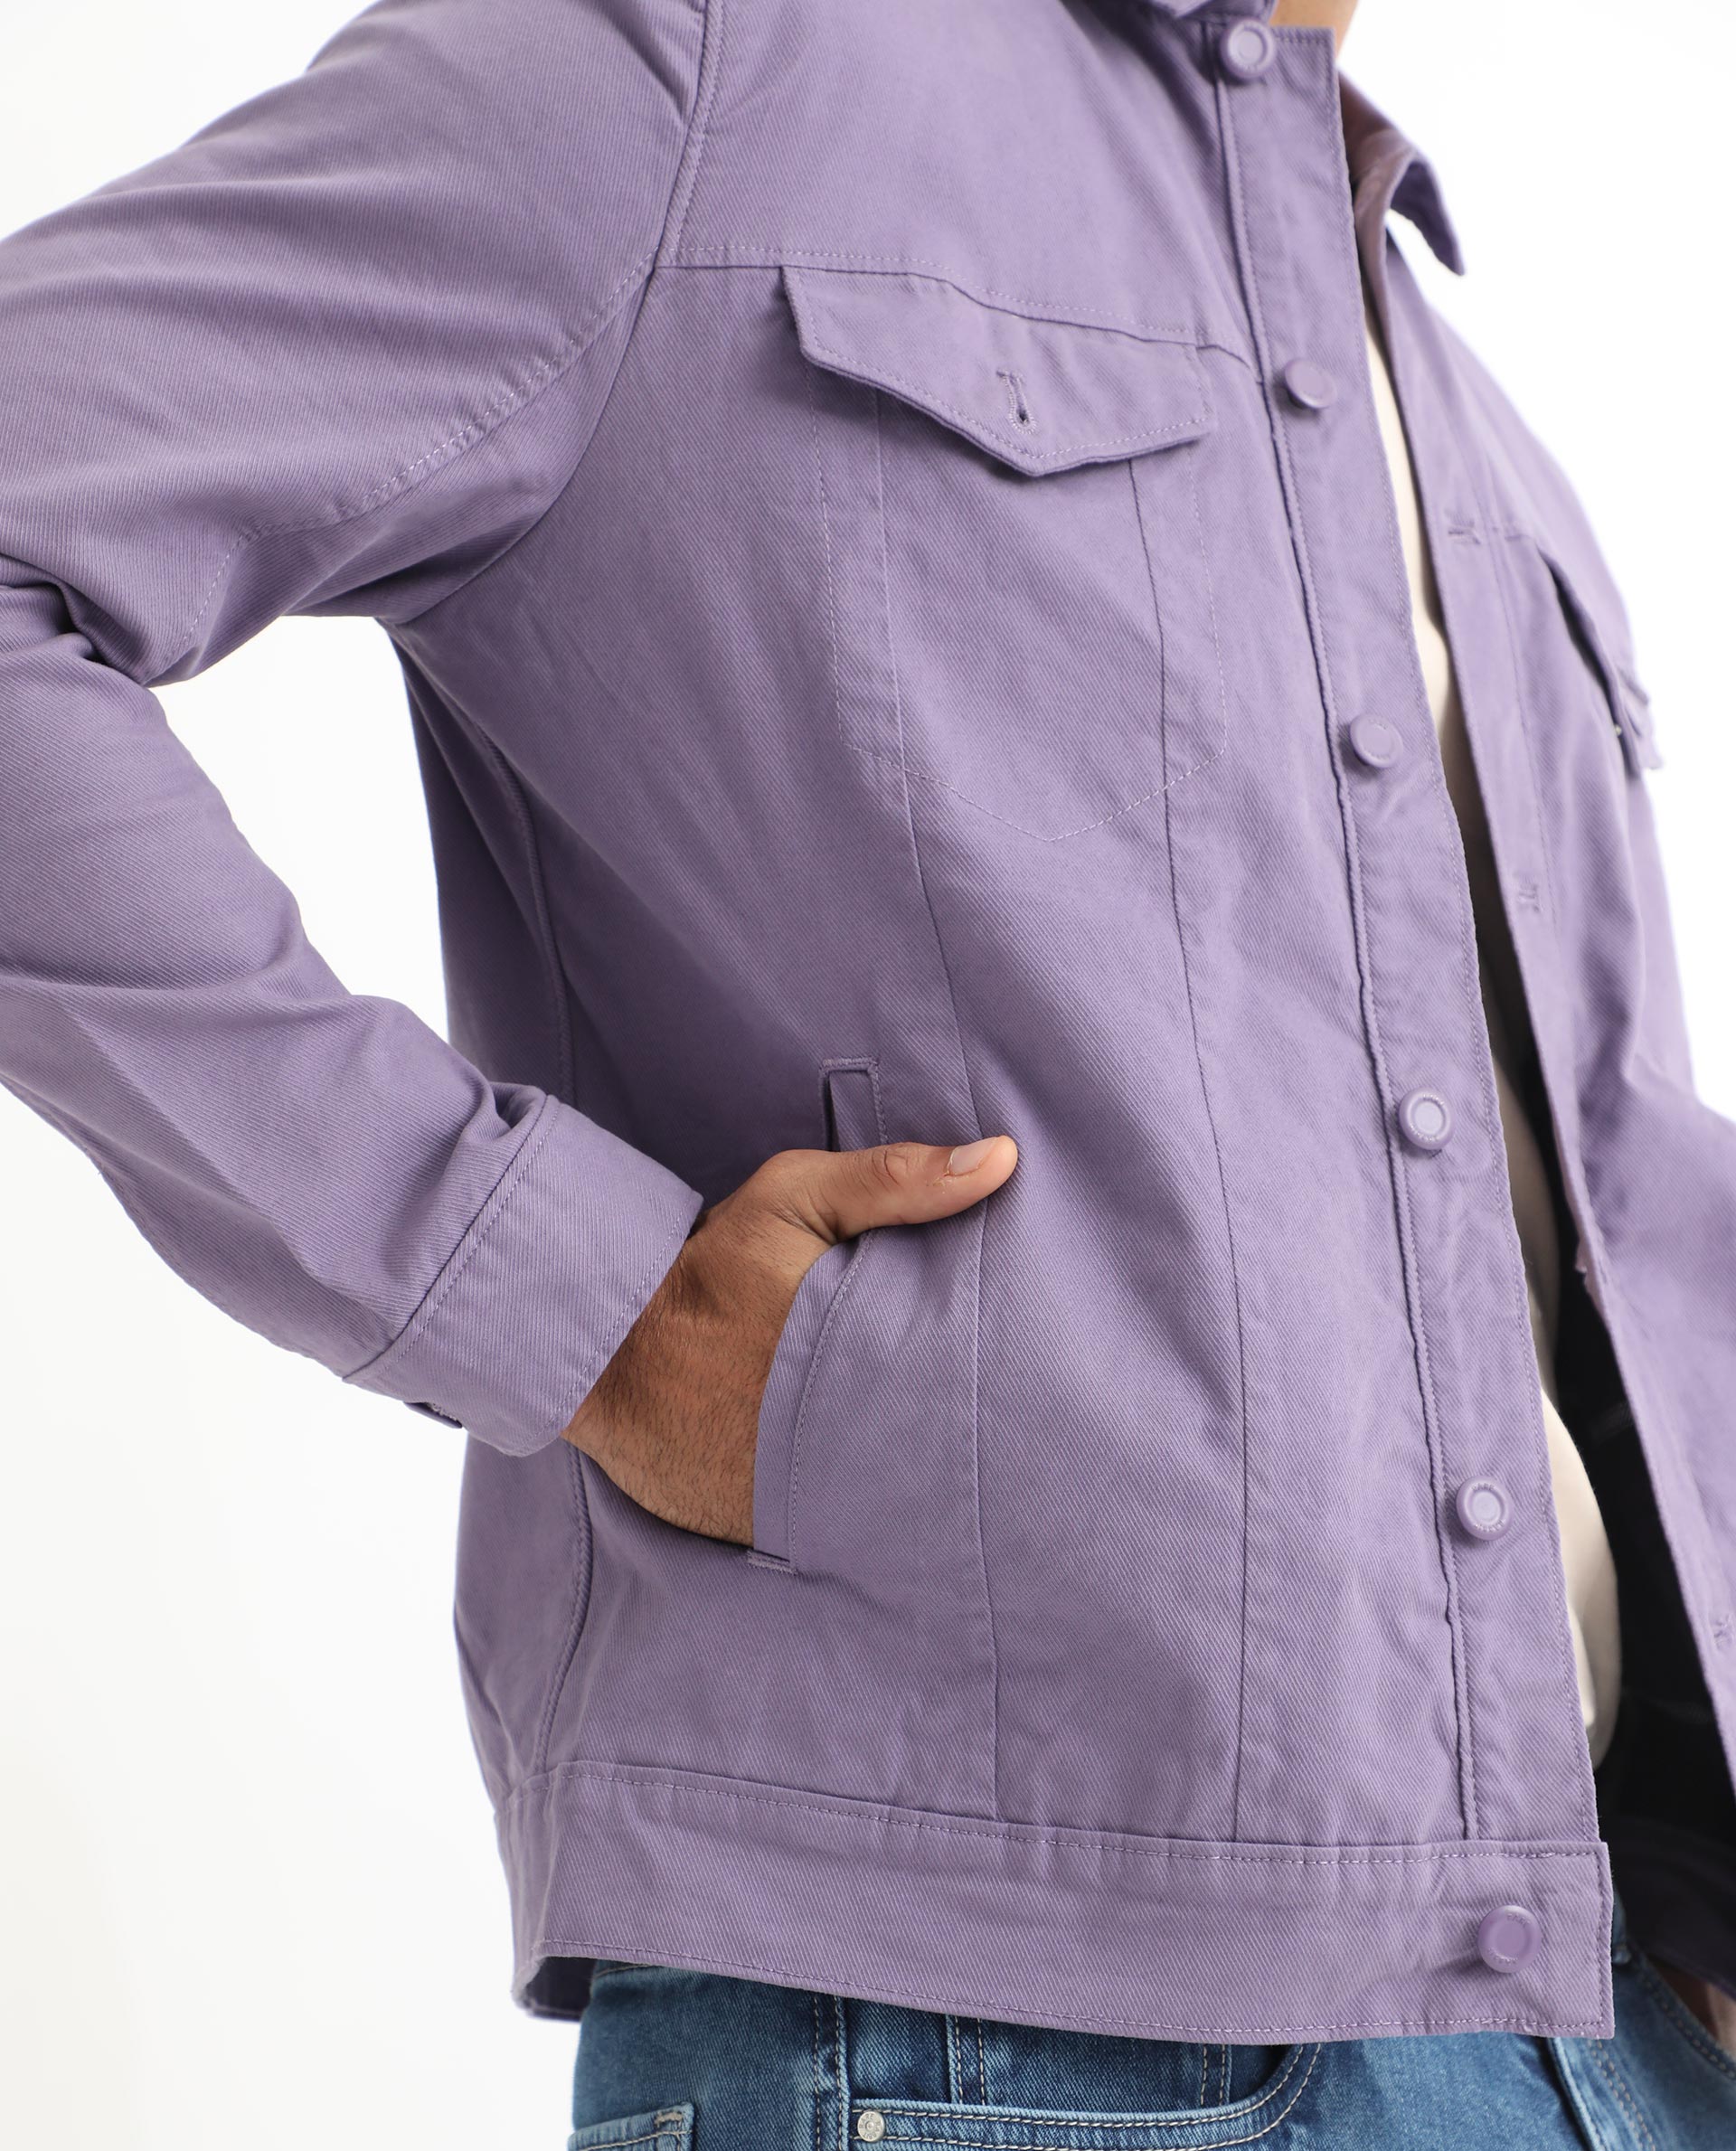 Men's Jackets & Coats: Shop Premium Italian Fashion | Replay